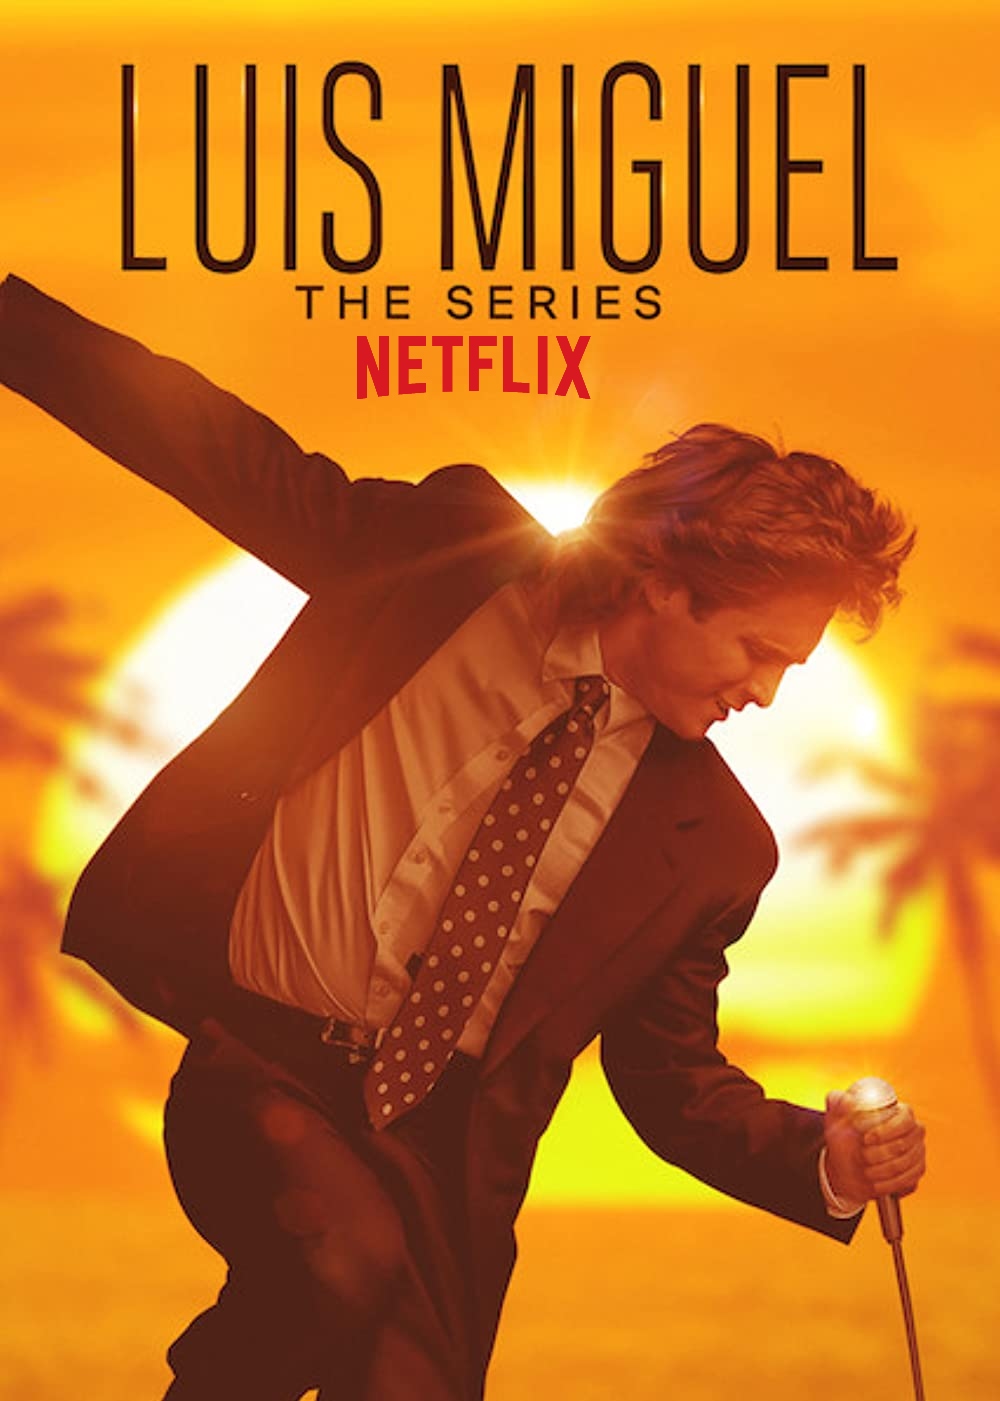 Is Luis Miguel The Series Season 3 on Netflix